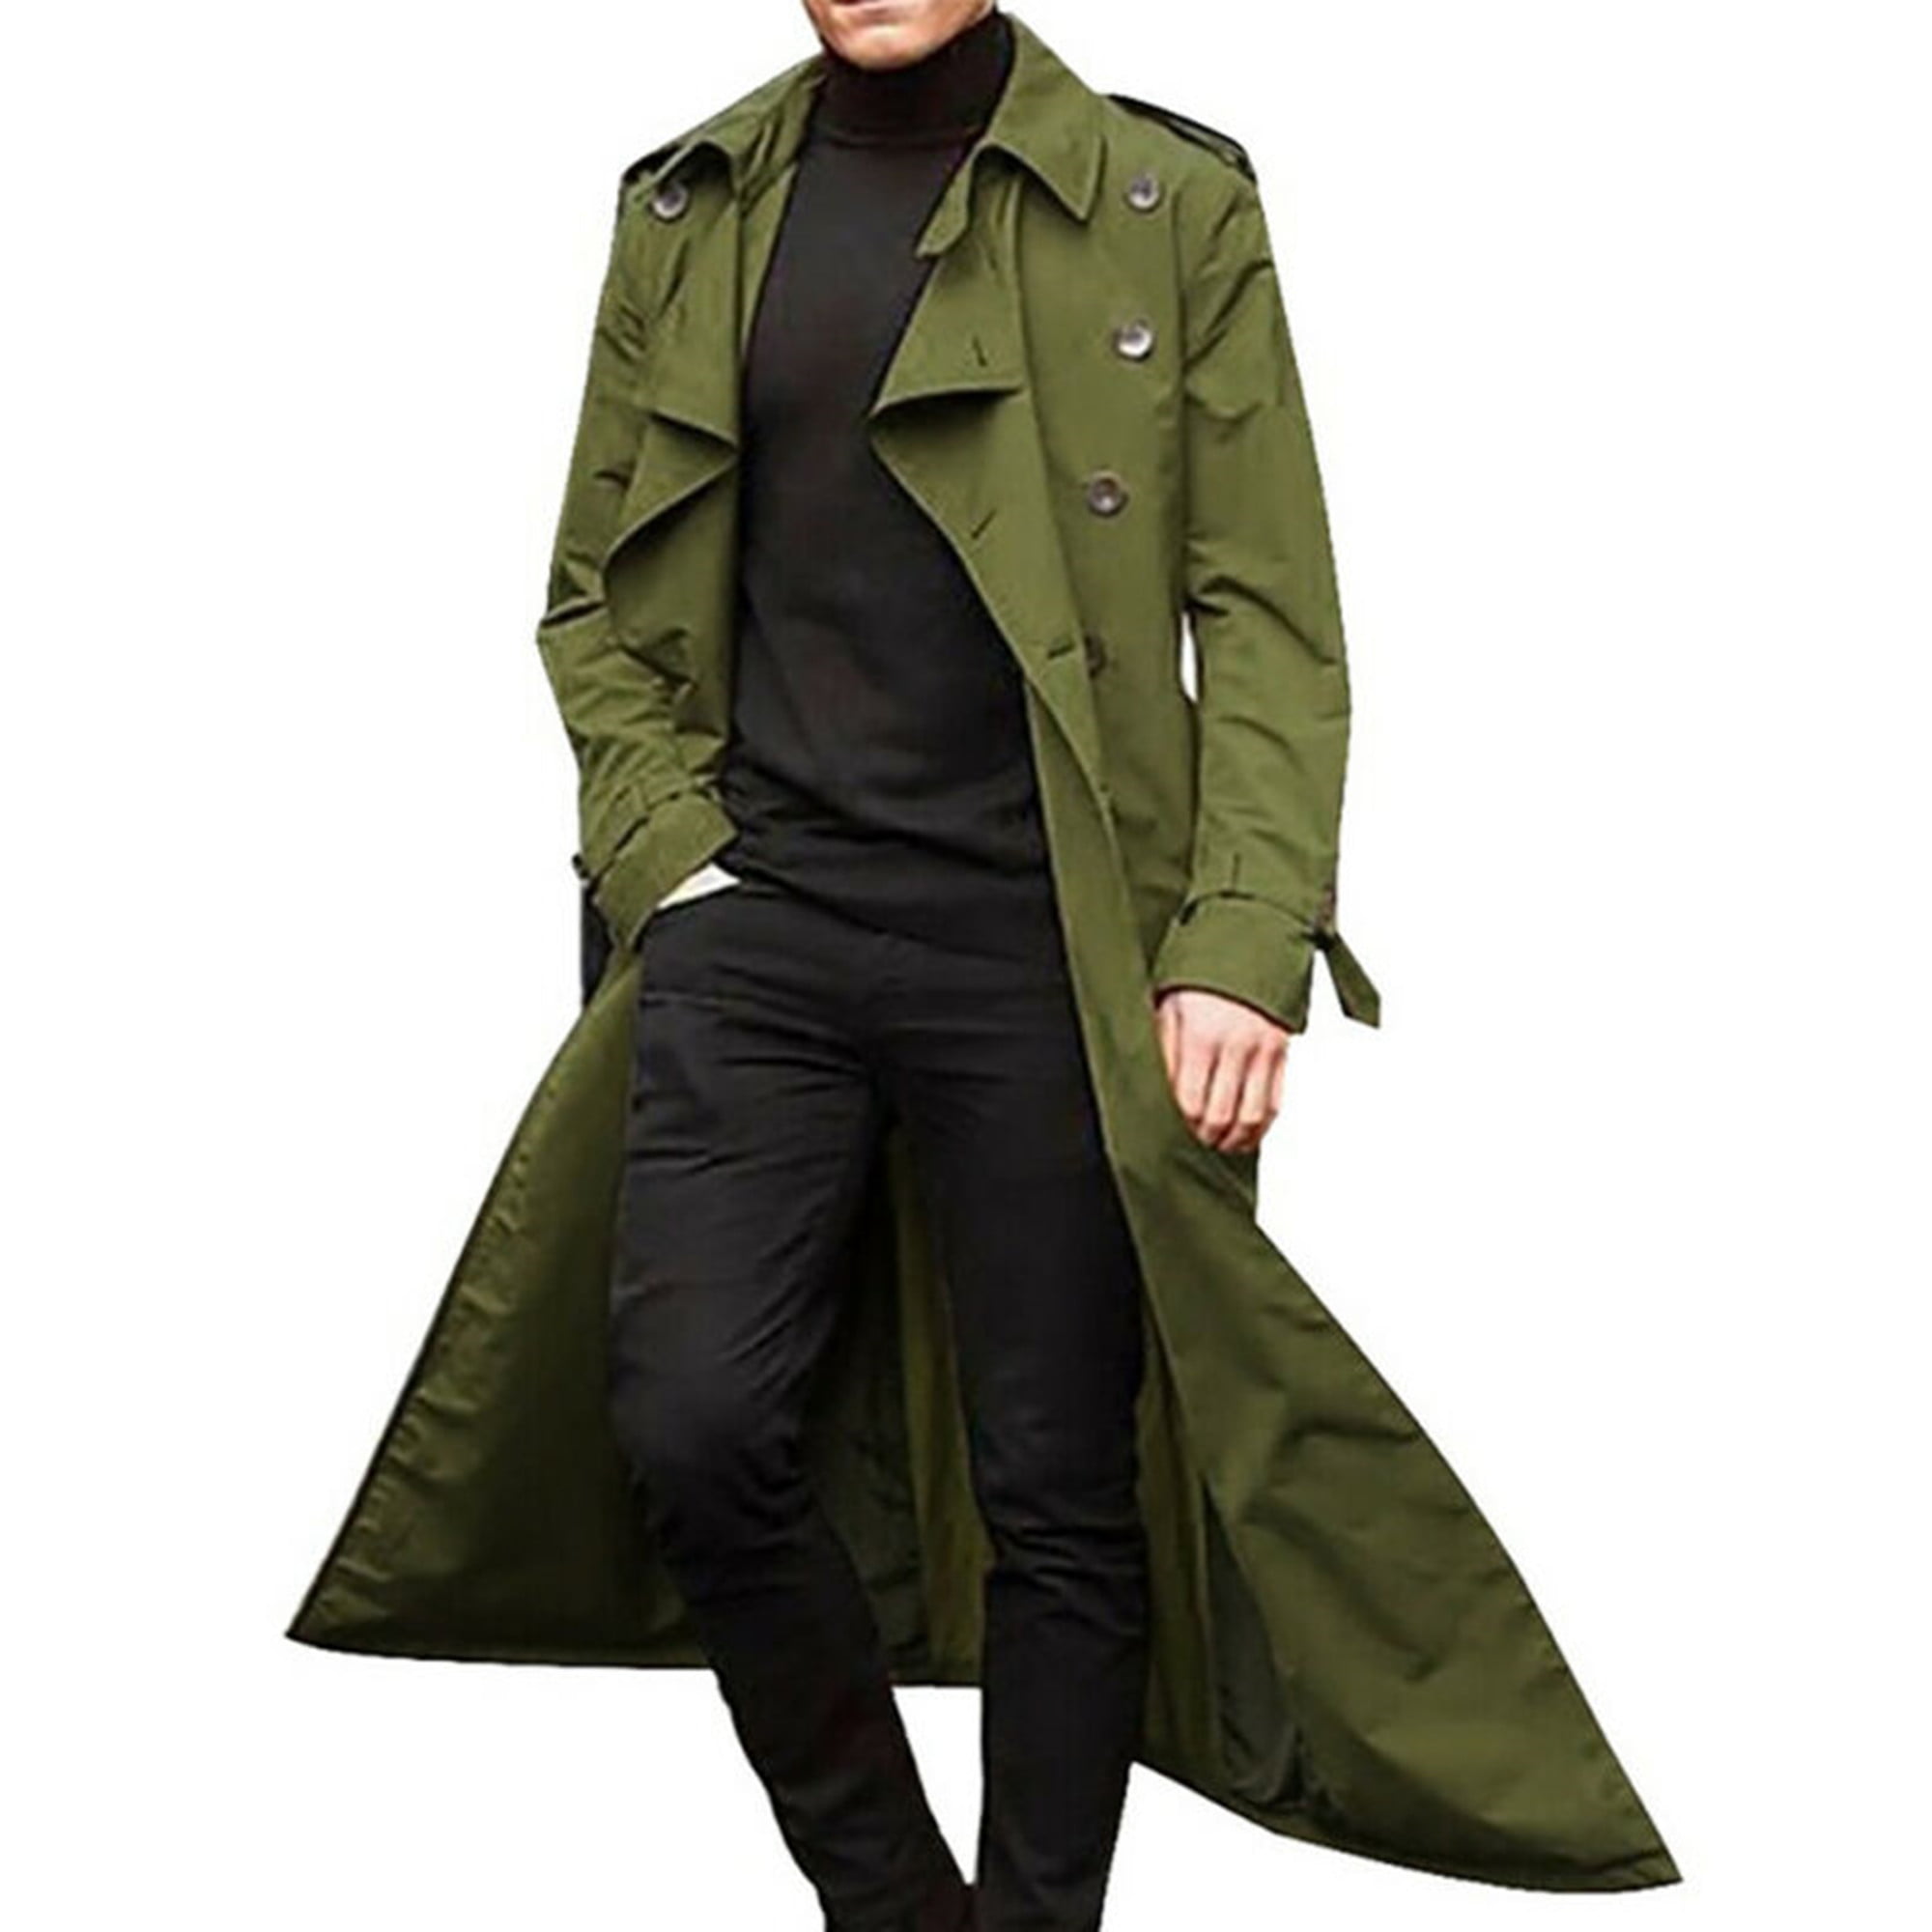 Allonly Mens Vintage Big Hood Trenchcoat Warm Cotton Winter Coat Windbreaker Long Jacket